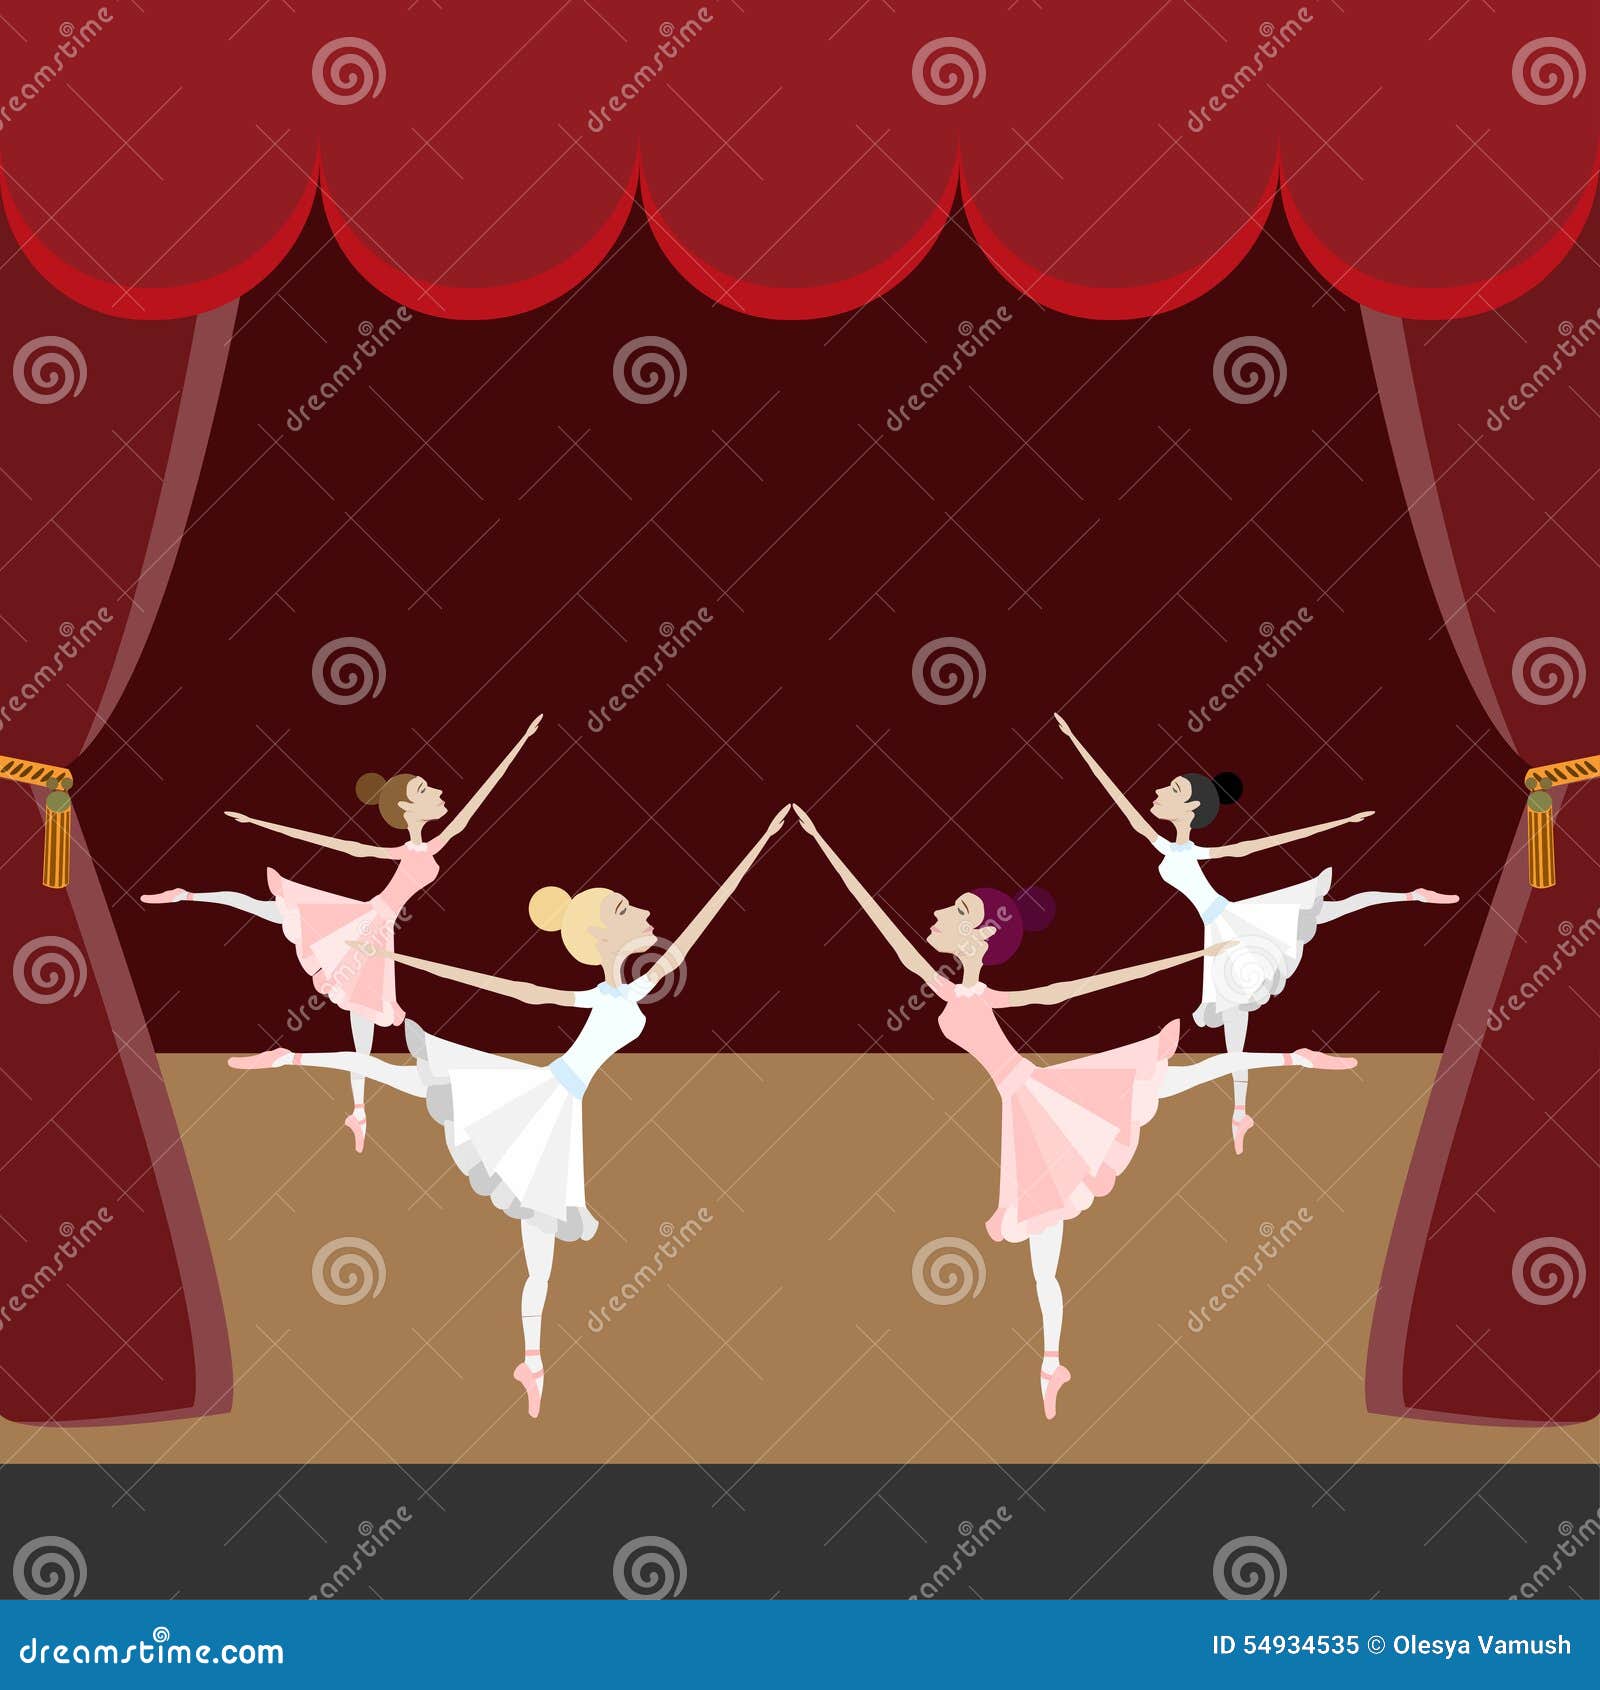 Ballerina performance stock illustration. Illustration of four - 54934535